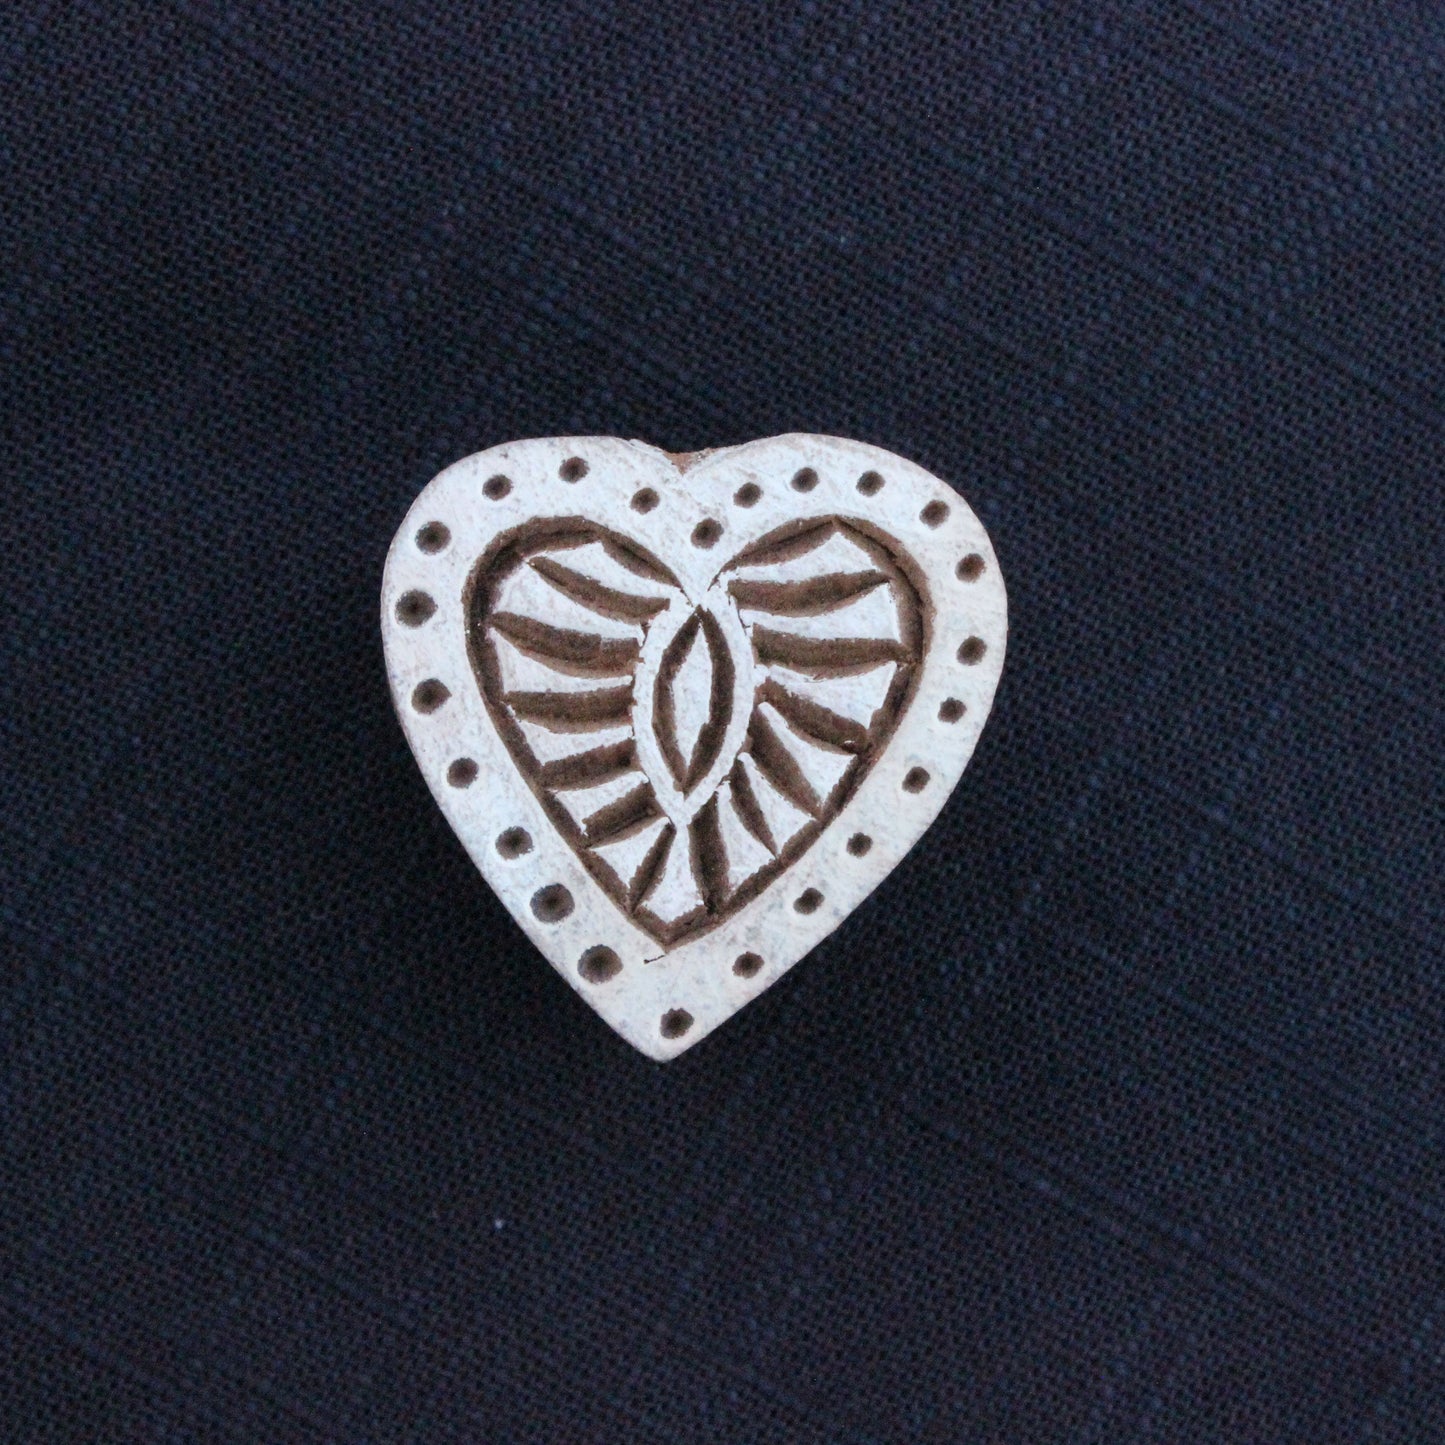 Heart Fabric Stamp Indian Wood Block Stamp Floral Wood Block Stamp Hand Carved Textile Block For Printing Card Making Soap Making Stamp